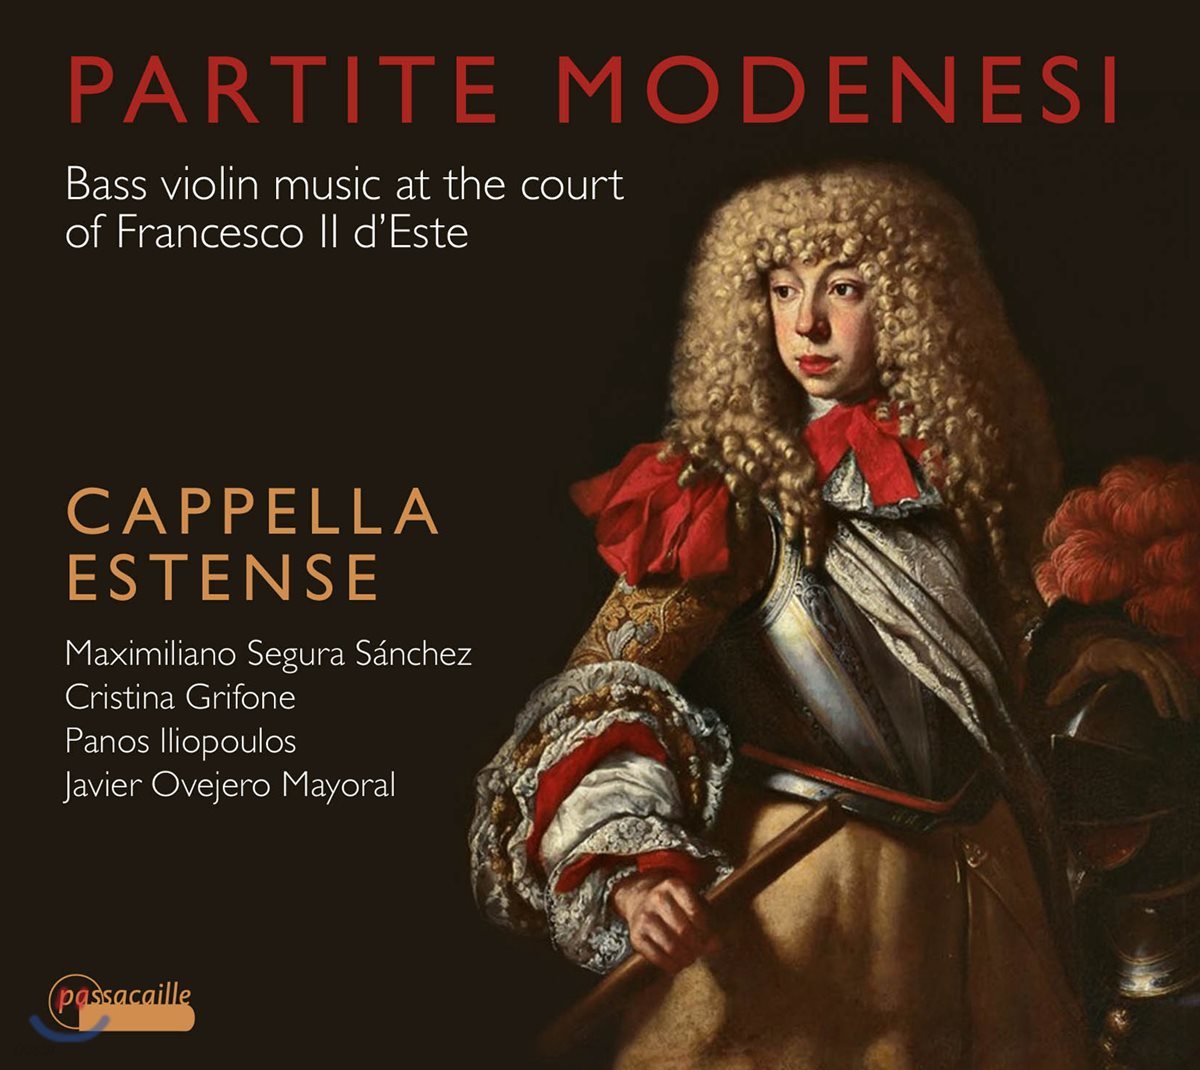 Cappella Estense 프란체스코 데스테 궁정의 베이스 바이올린 음악 [초기 첼로 연주집] (Partite Modenesi - Bass violin music at the court of Francesco II d'Este) 